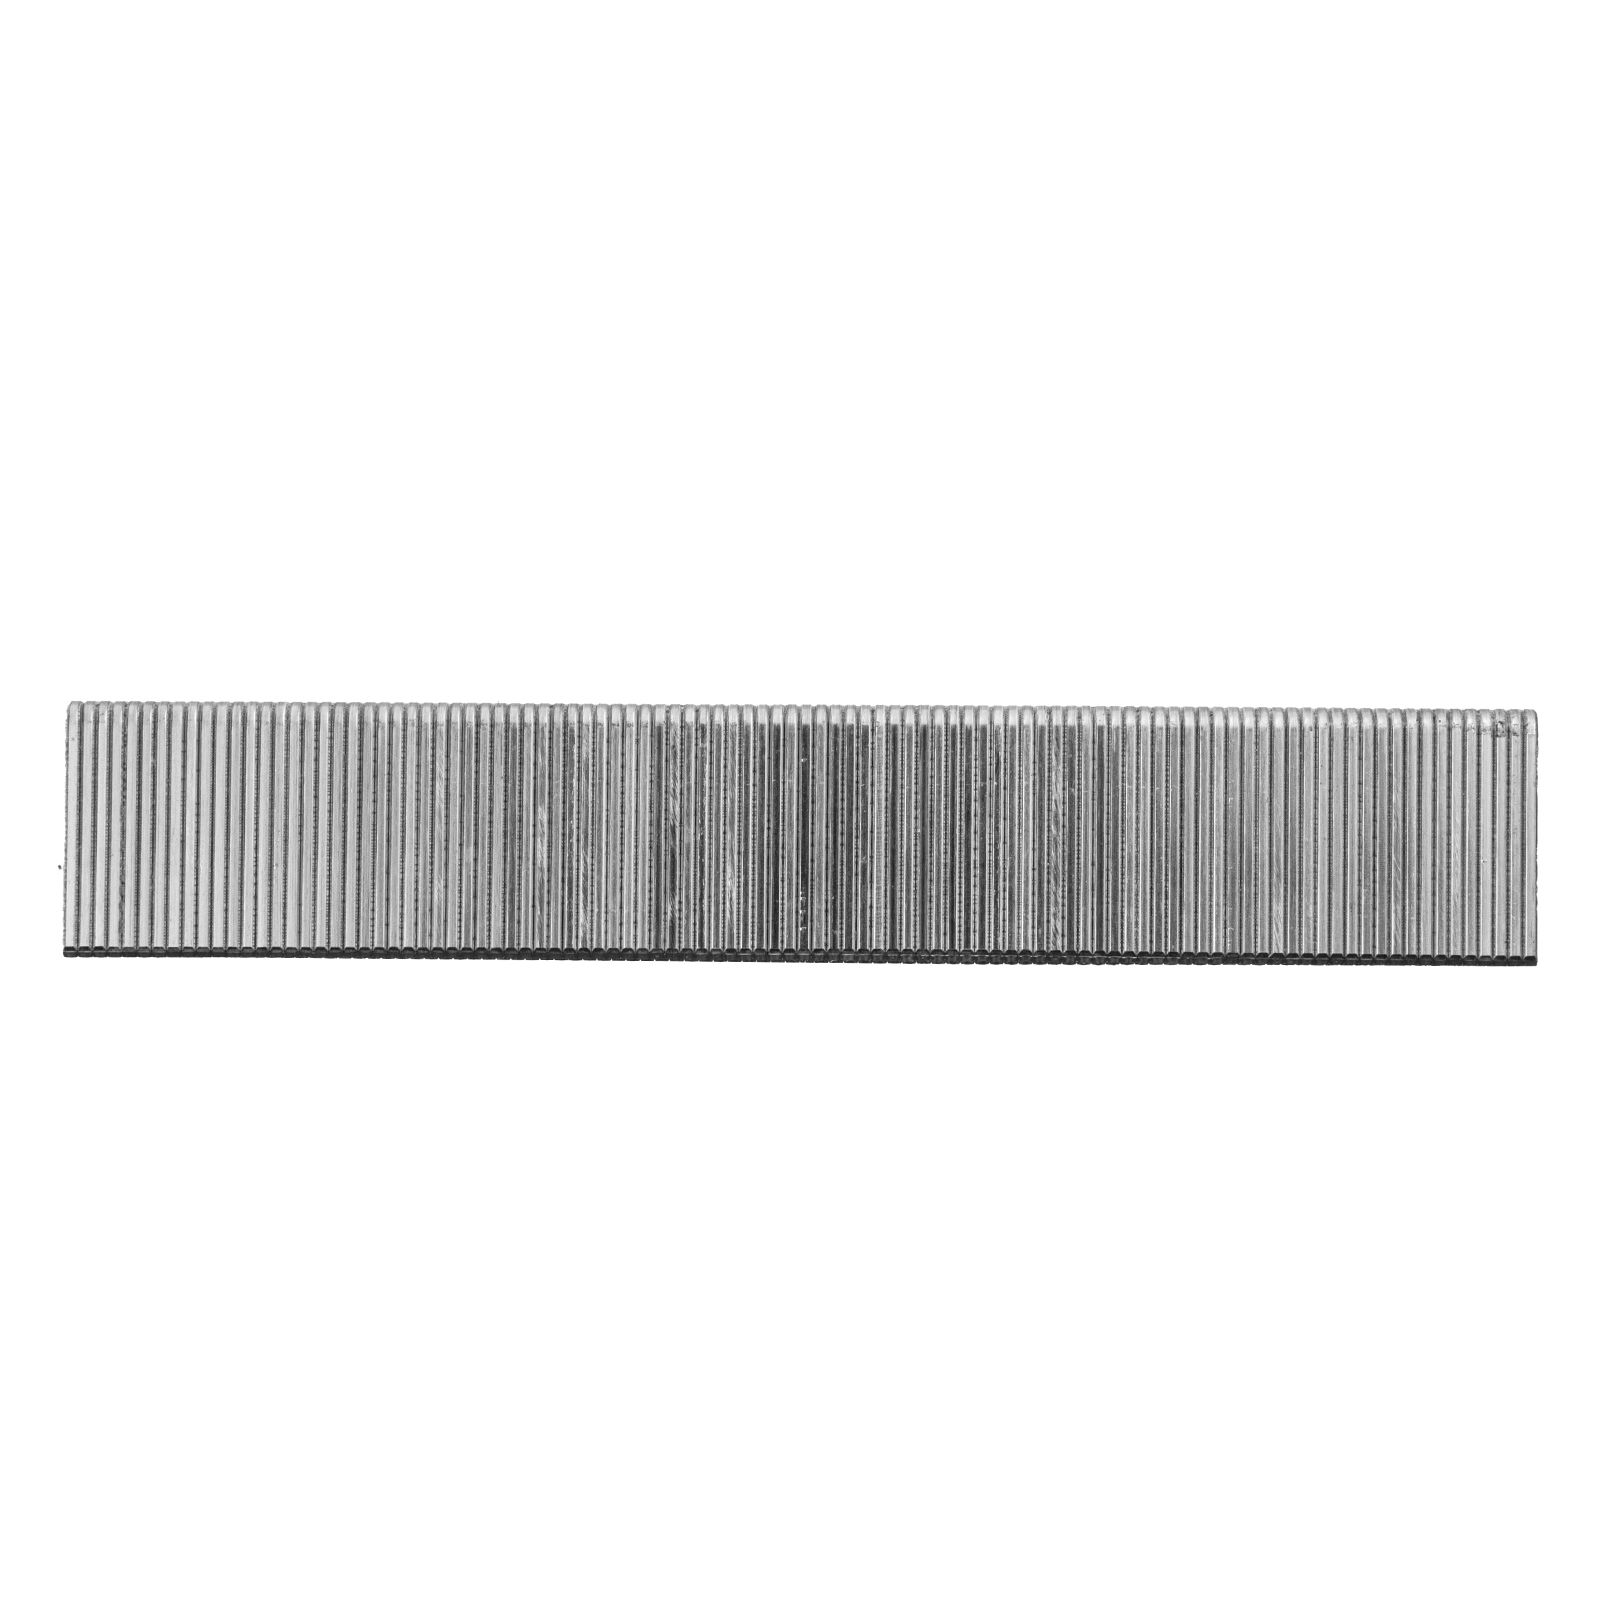 Скобы для пневматического степлера 18GA, 1.25 х 1 мм длина 22 мм ширина 5,7 мм, 5000 шт Matrix 